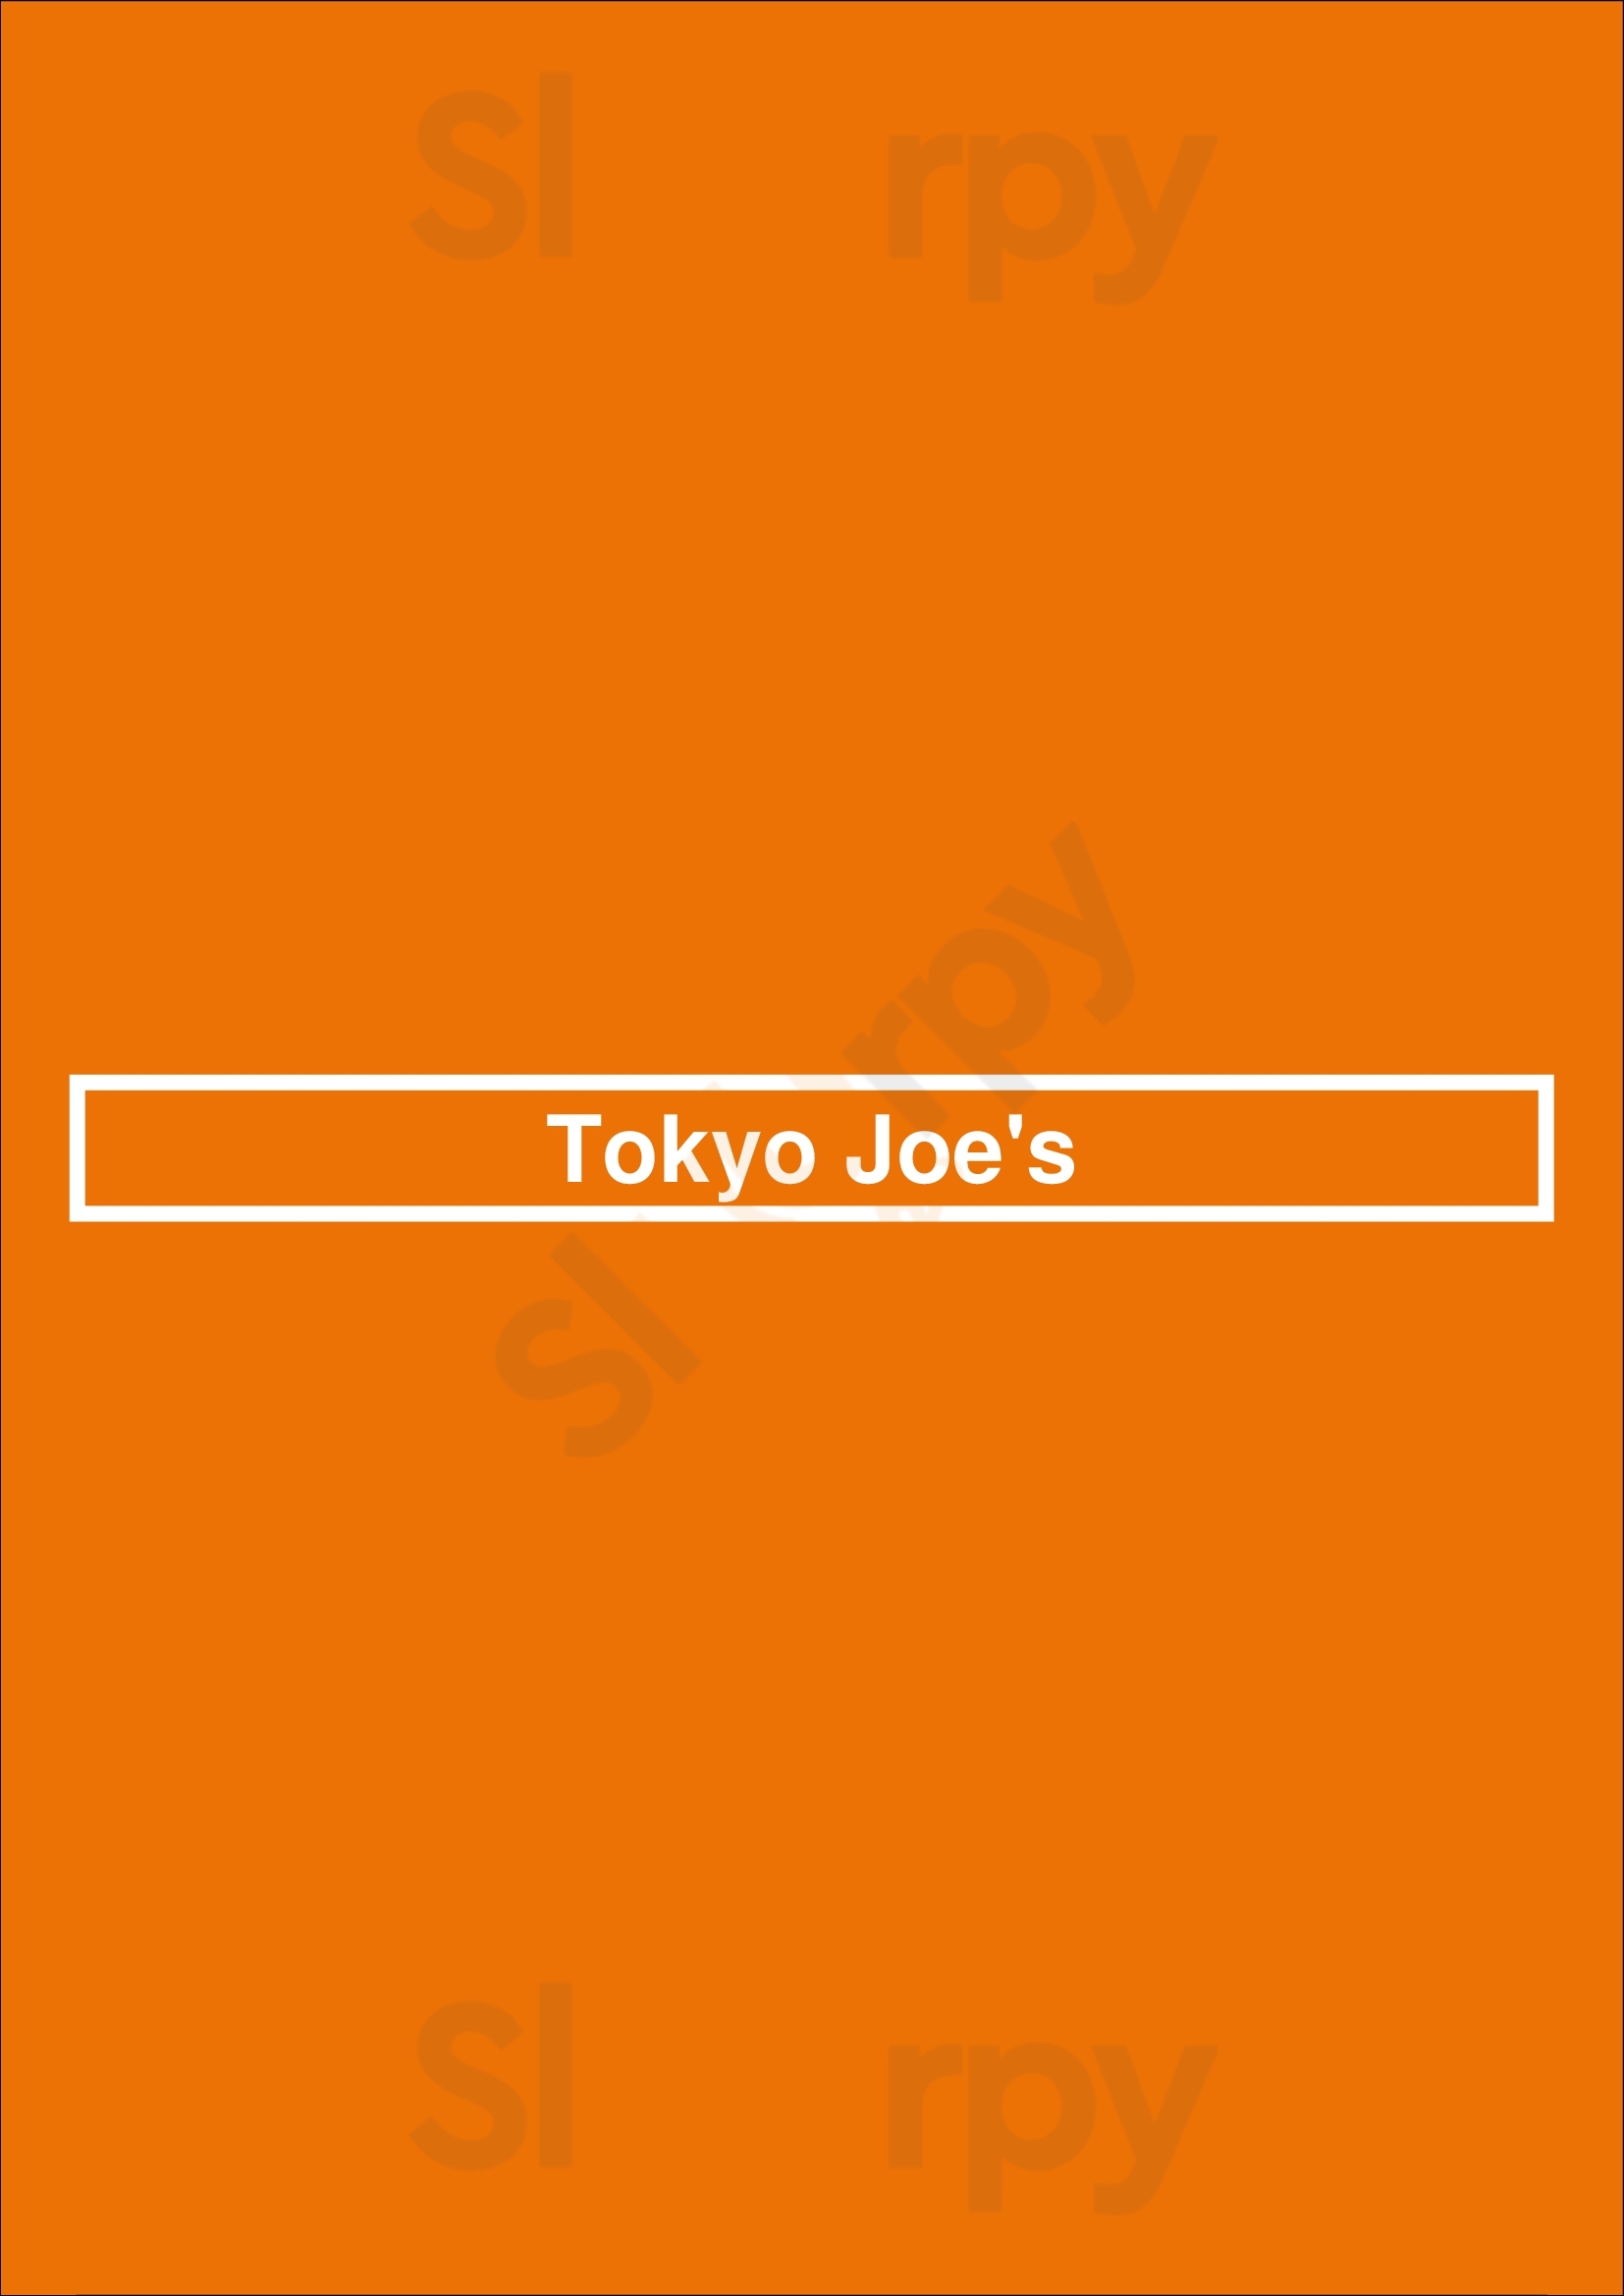 Tokyo Joe's Vancouver Menu - 1